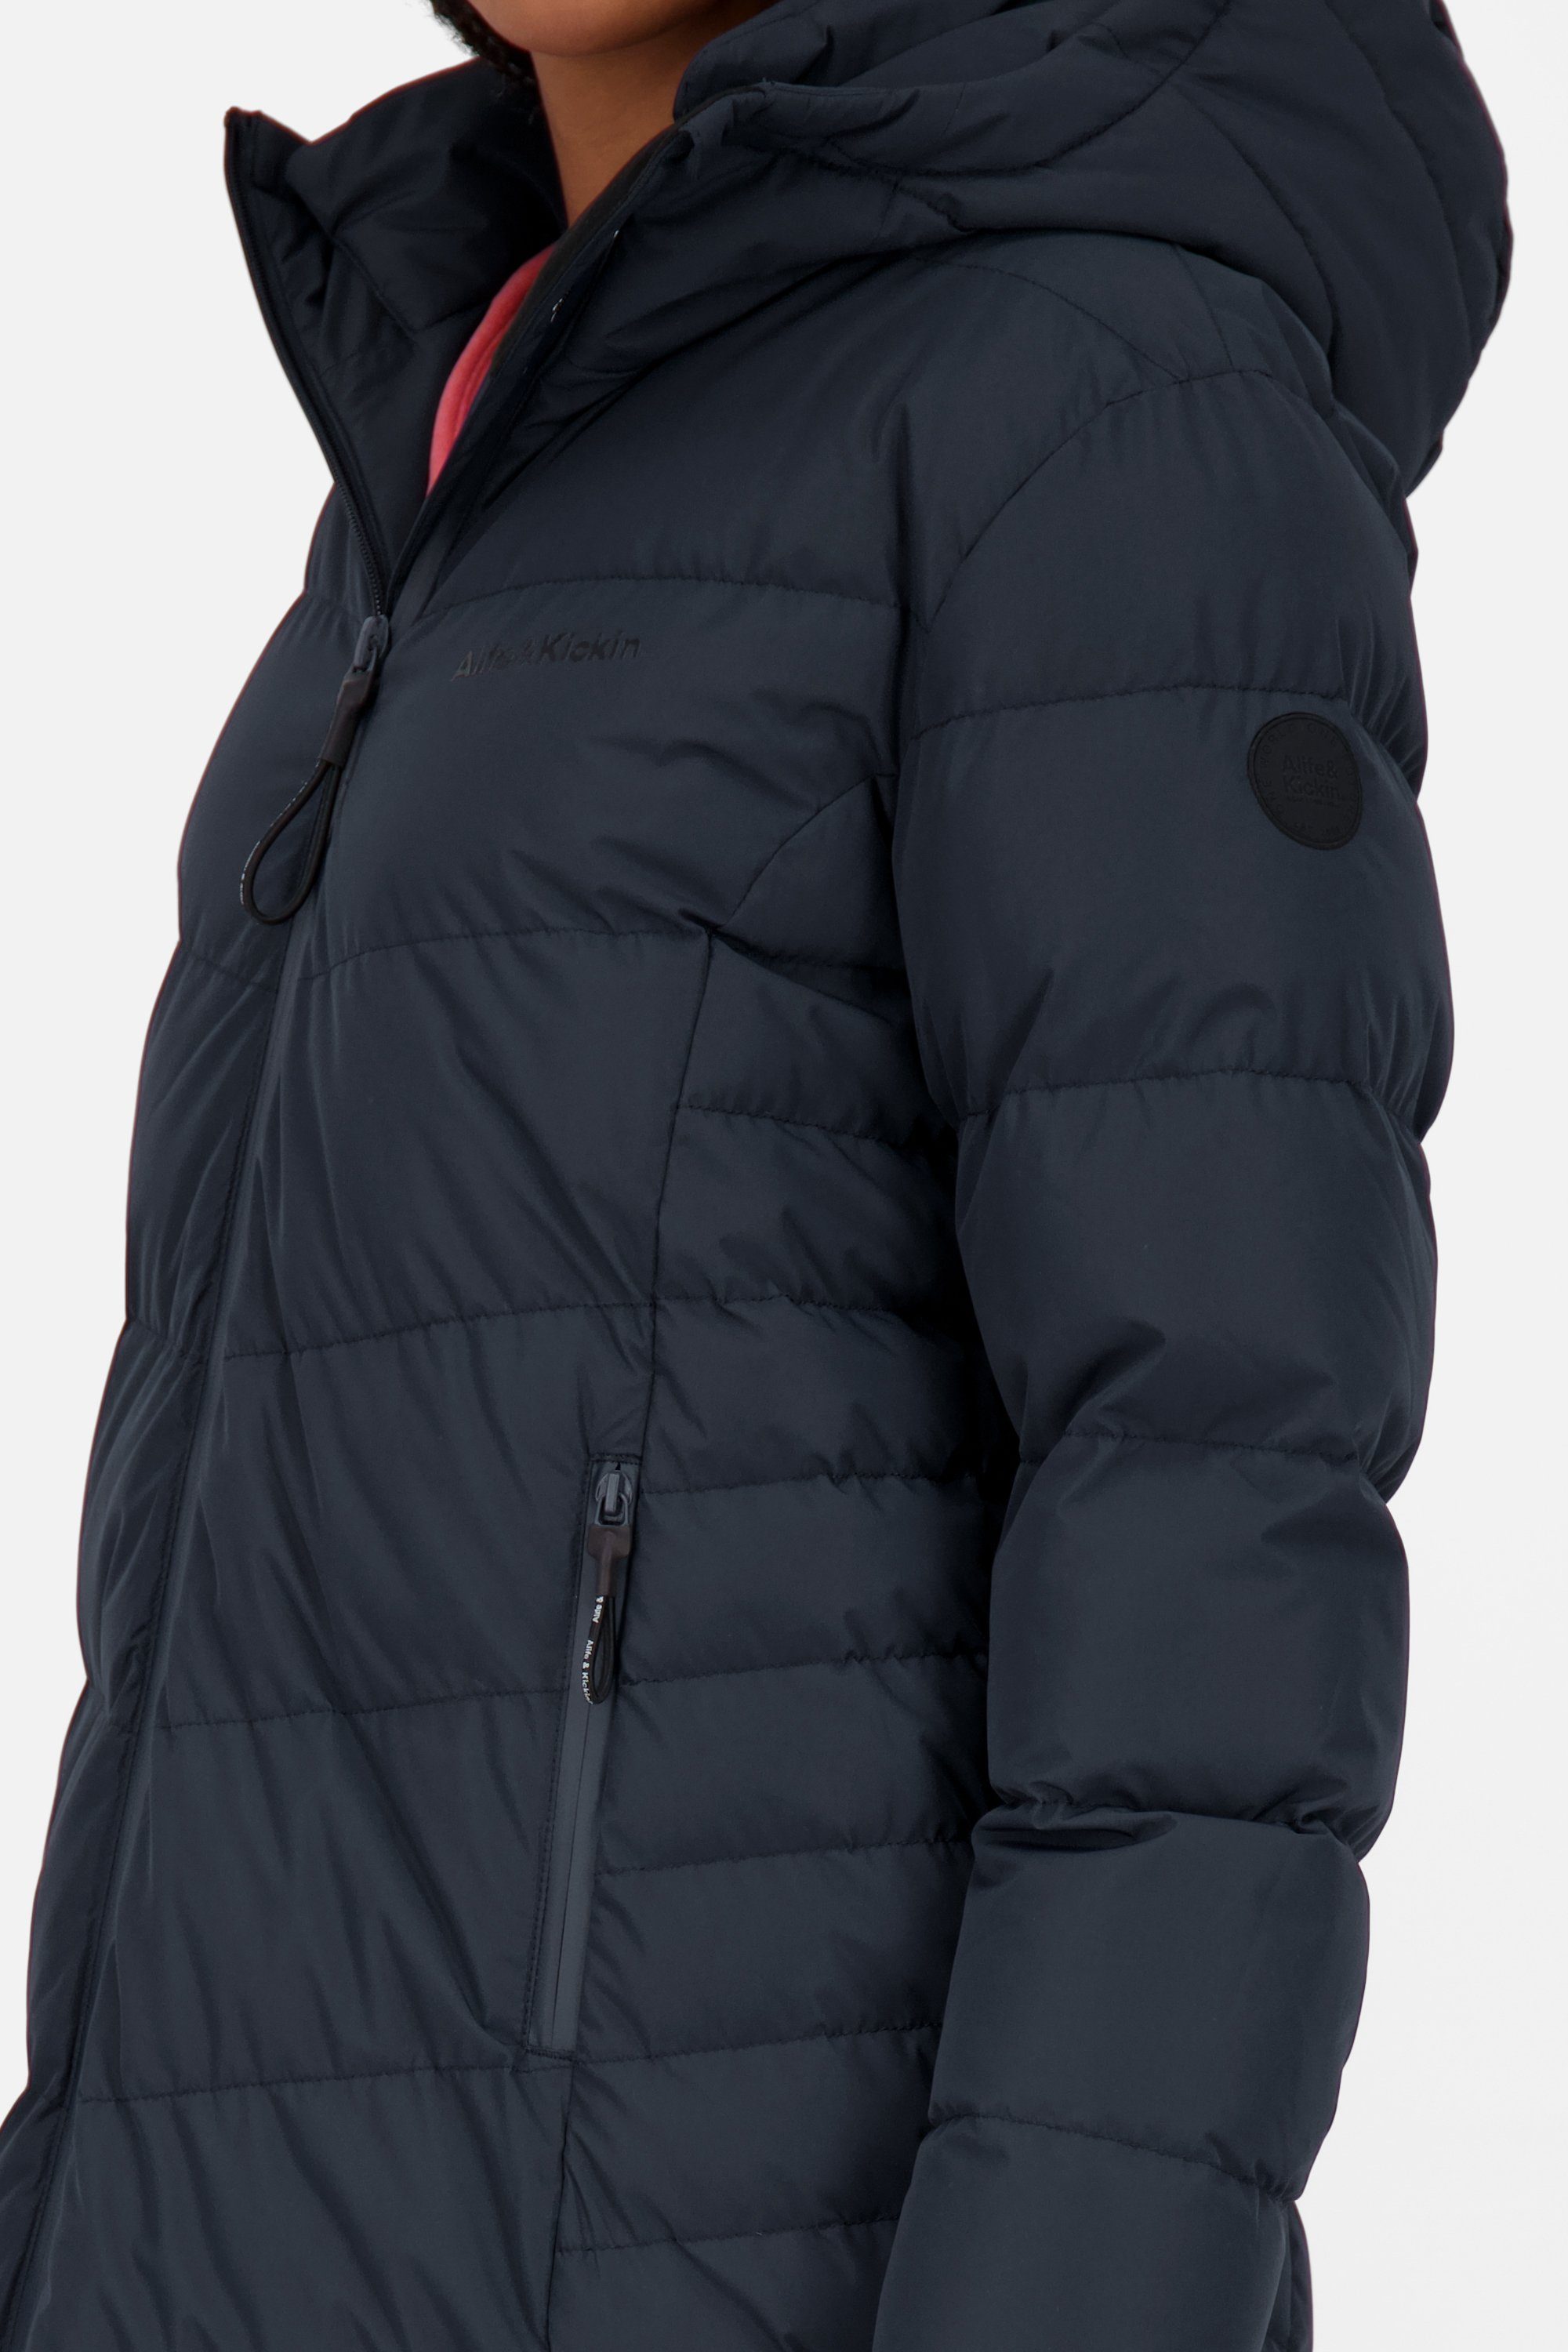 Alife & Kickin Winterjacke Puffer A Coat Jacke Damen Winterjacke, NinaAK marine